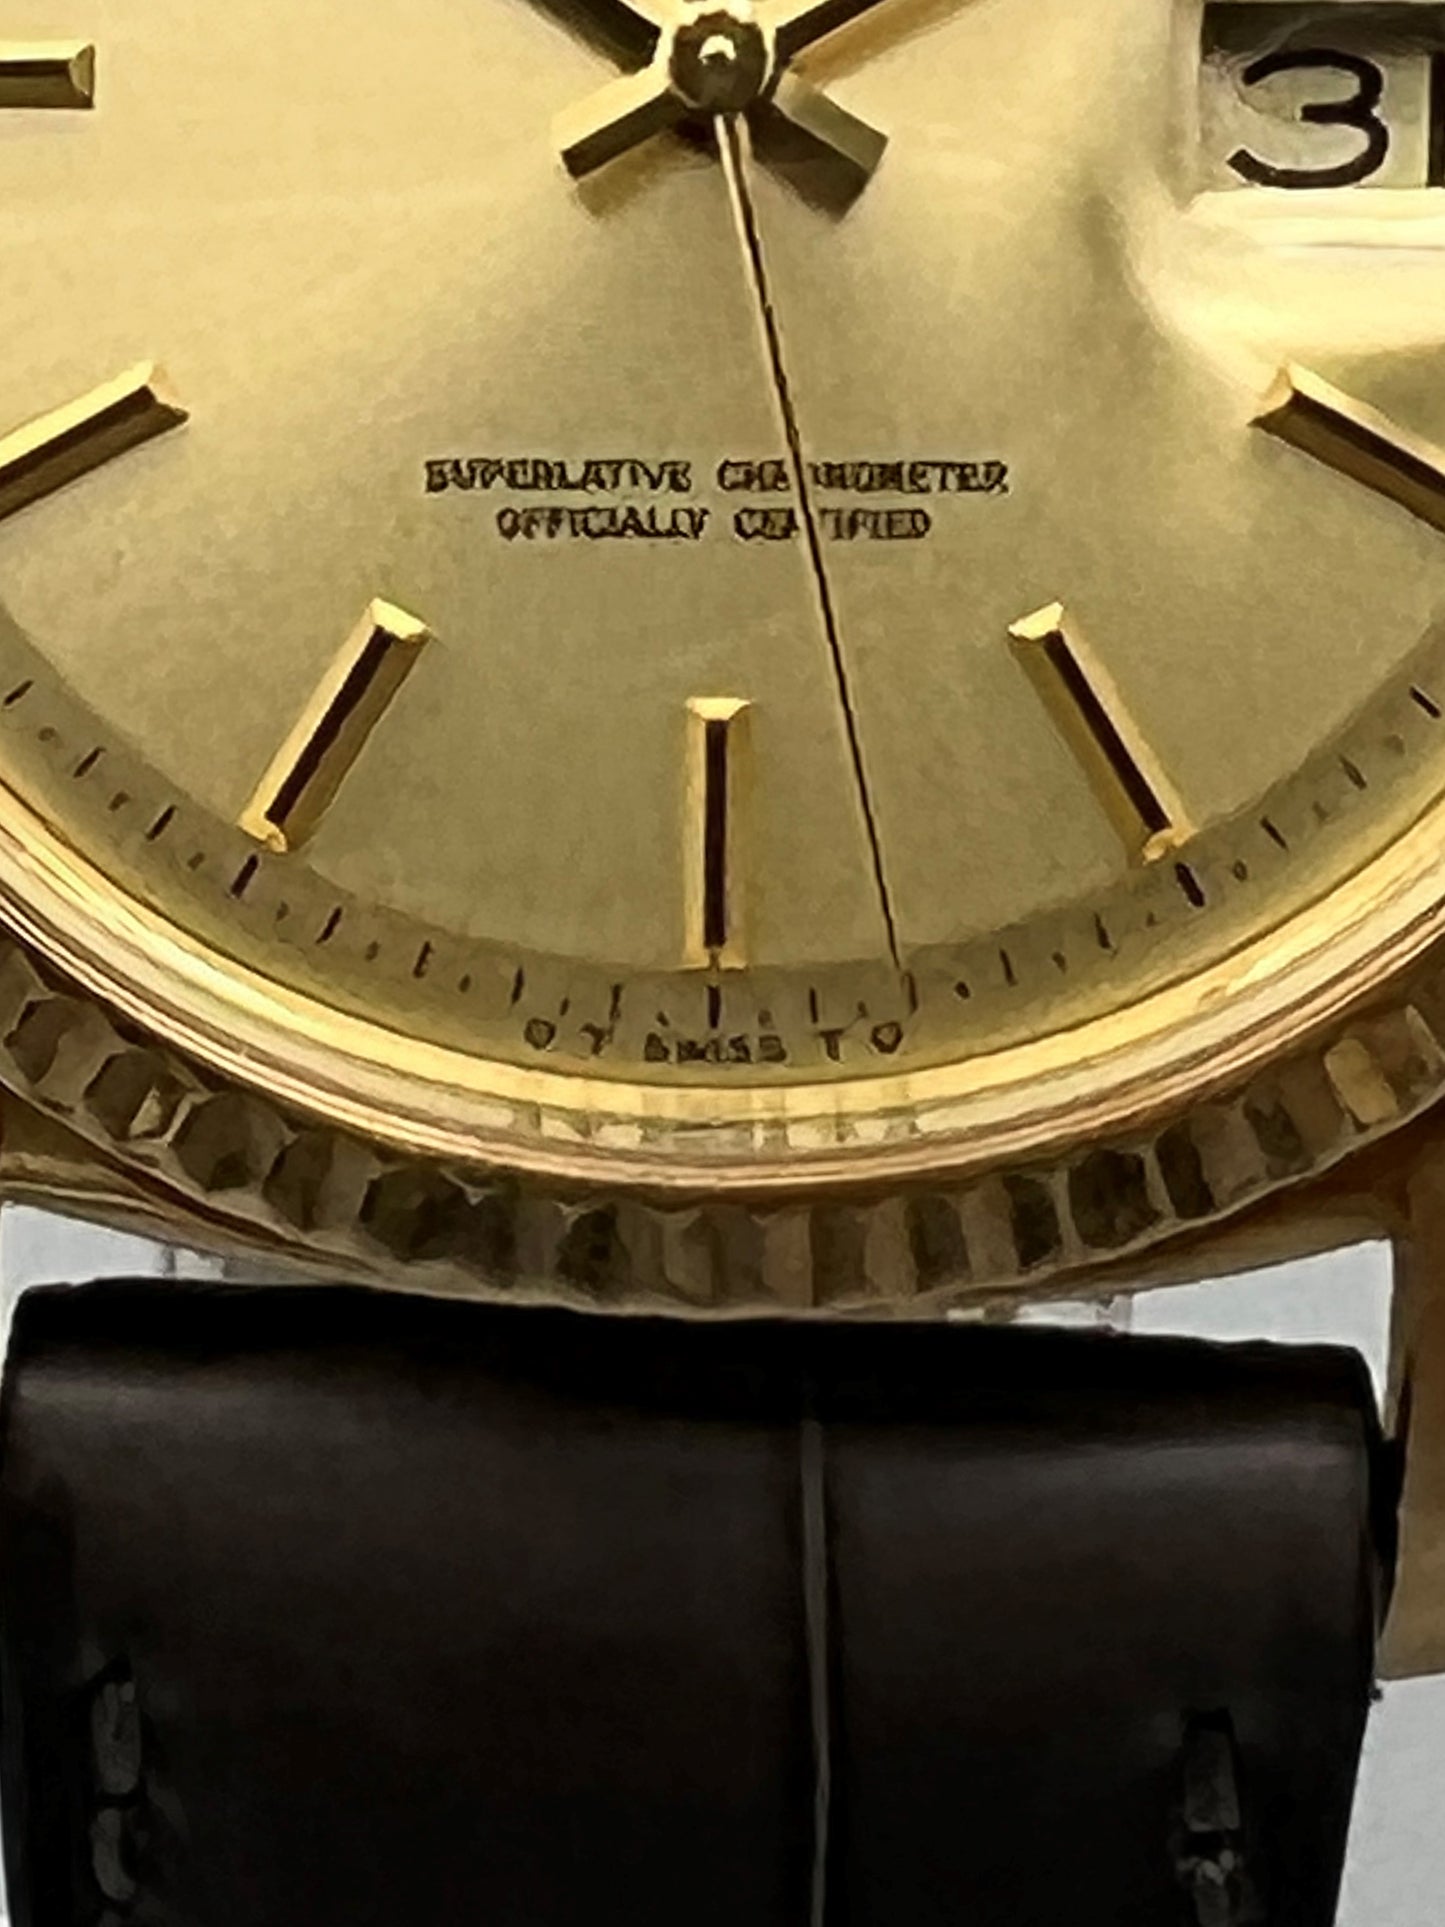 Rolex Ref 1803 Day-Date Rare Sigma Dial, 1972 Amazing Condition